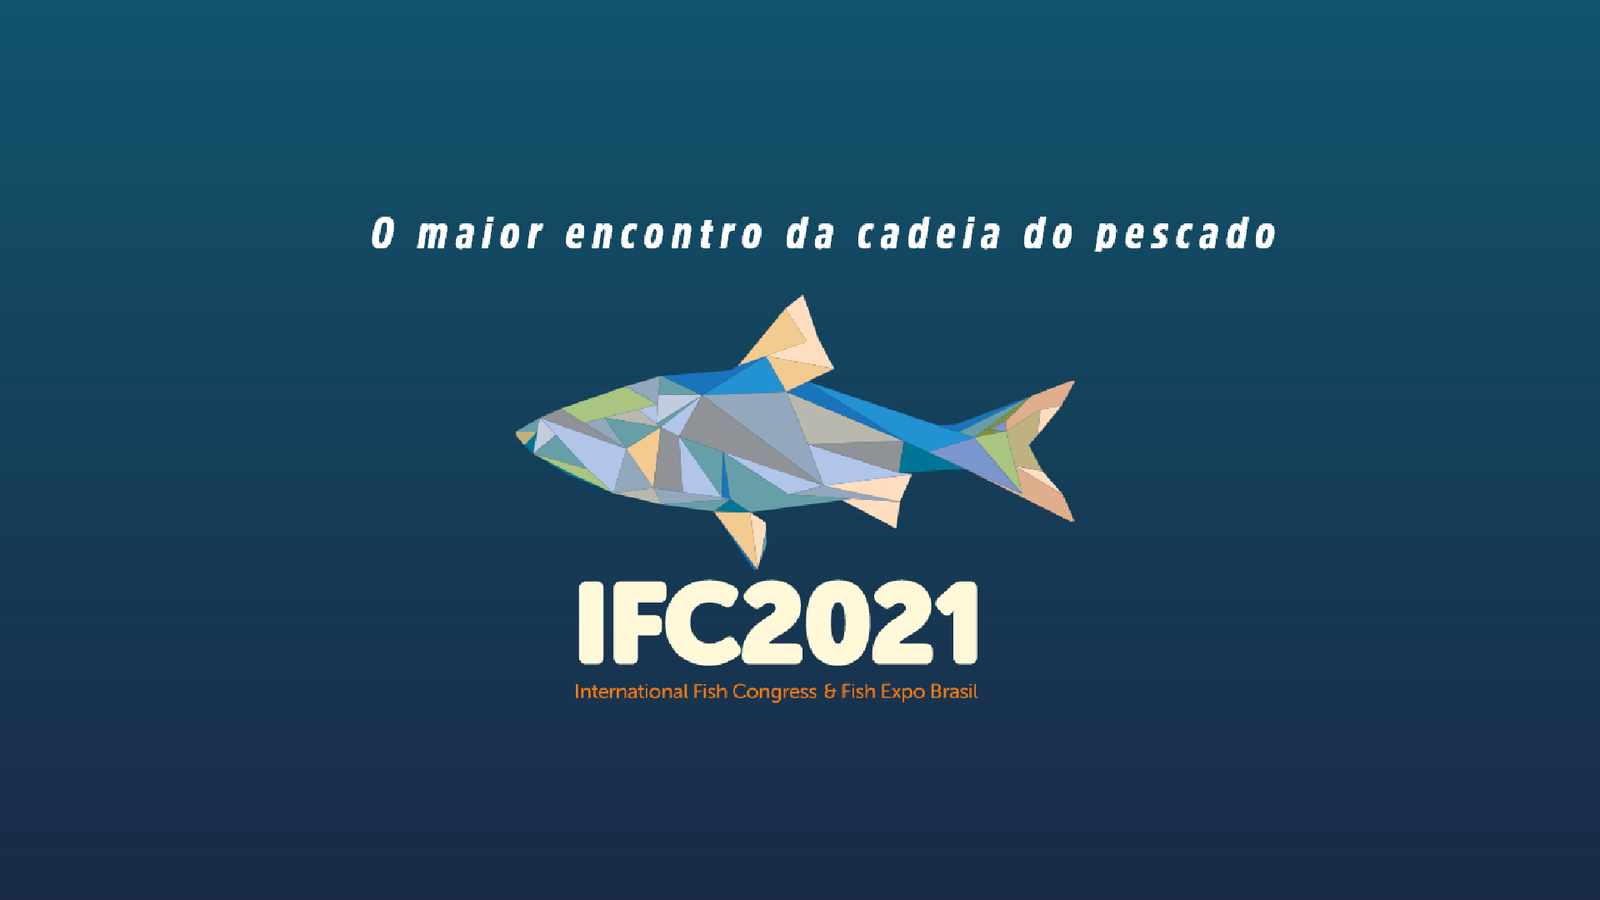 ABRA participará do III International Fish Congress & Fish Expo